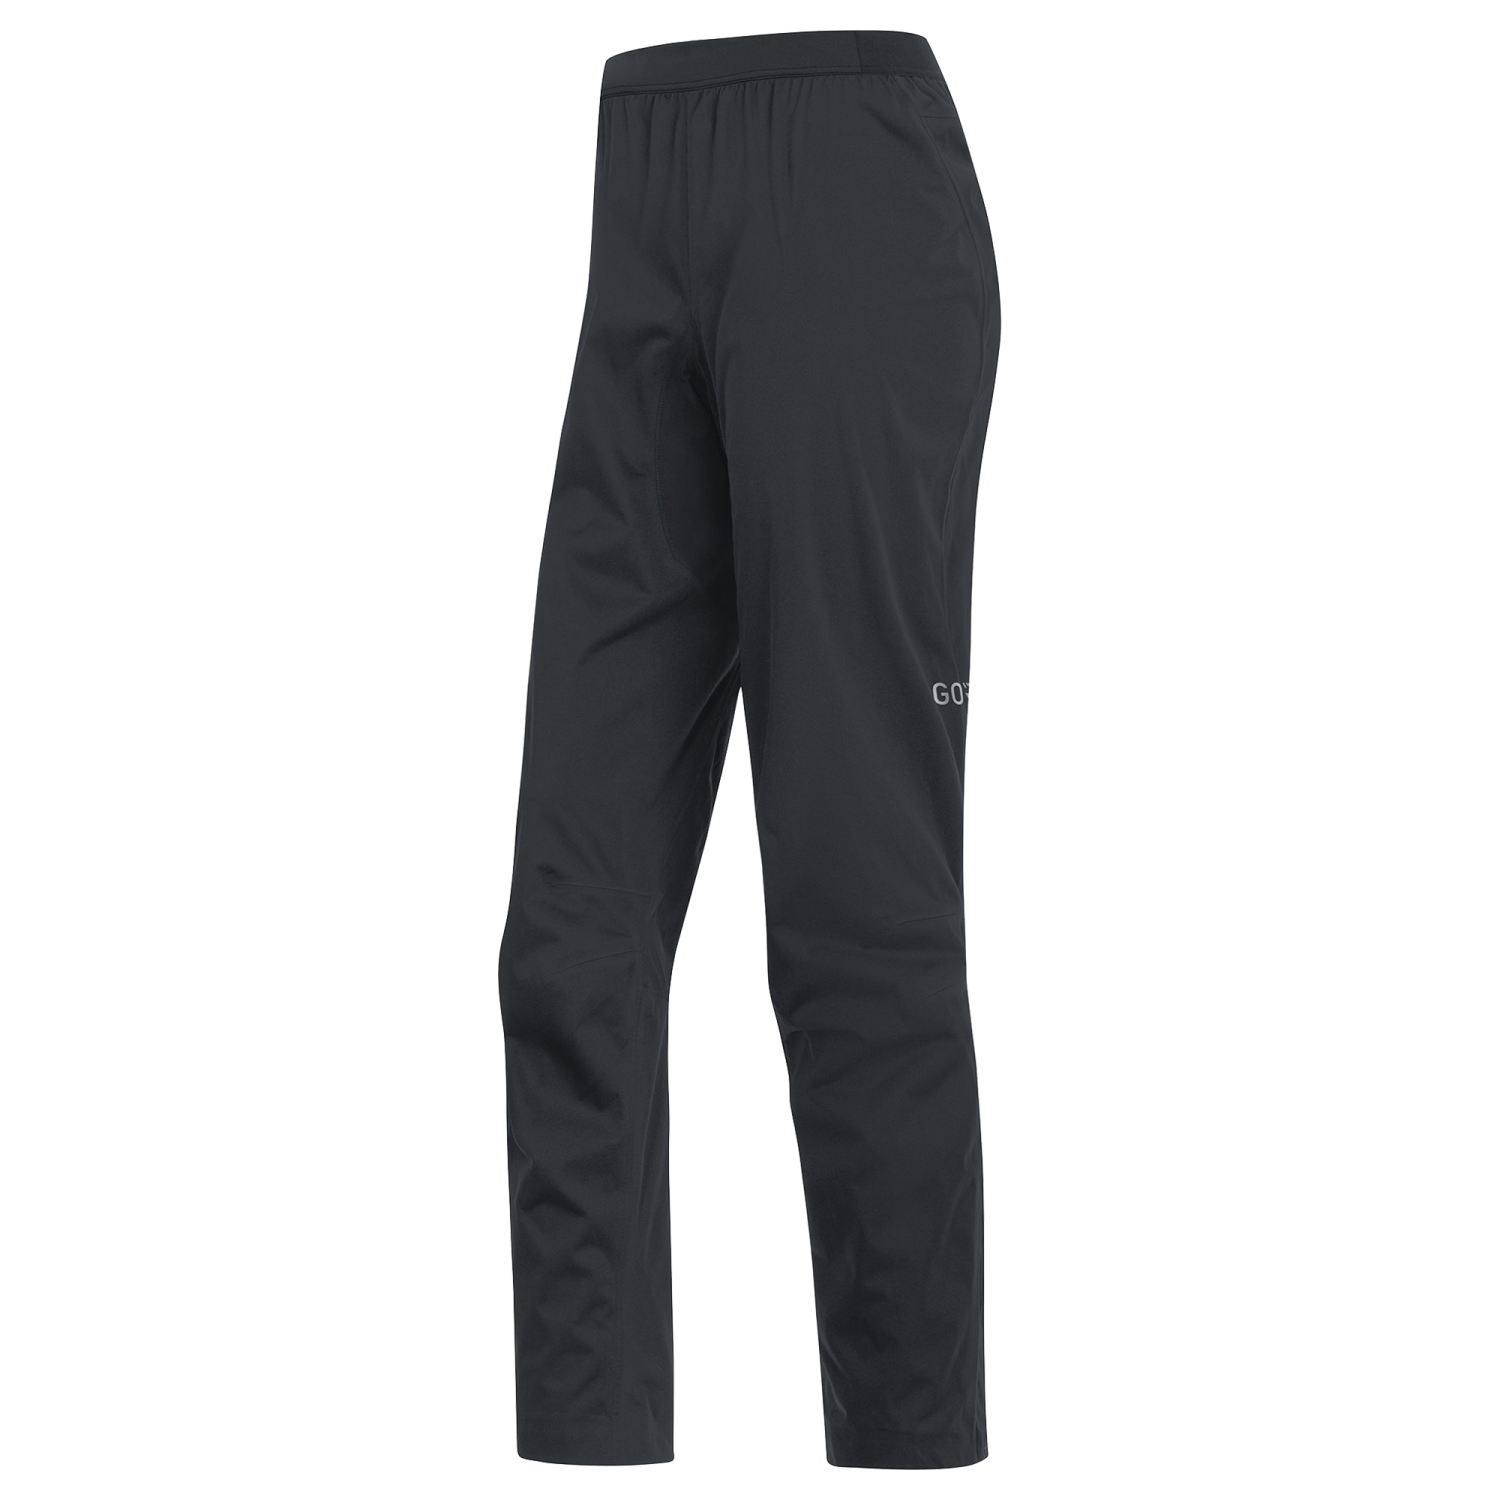 GOREWEAR C5 Women's GORE-TEX Active Trail Cycling Pants in Black | Small (4-6) | Regular fit | Waterproof